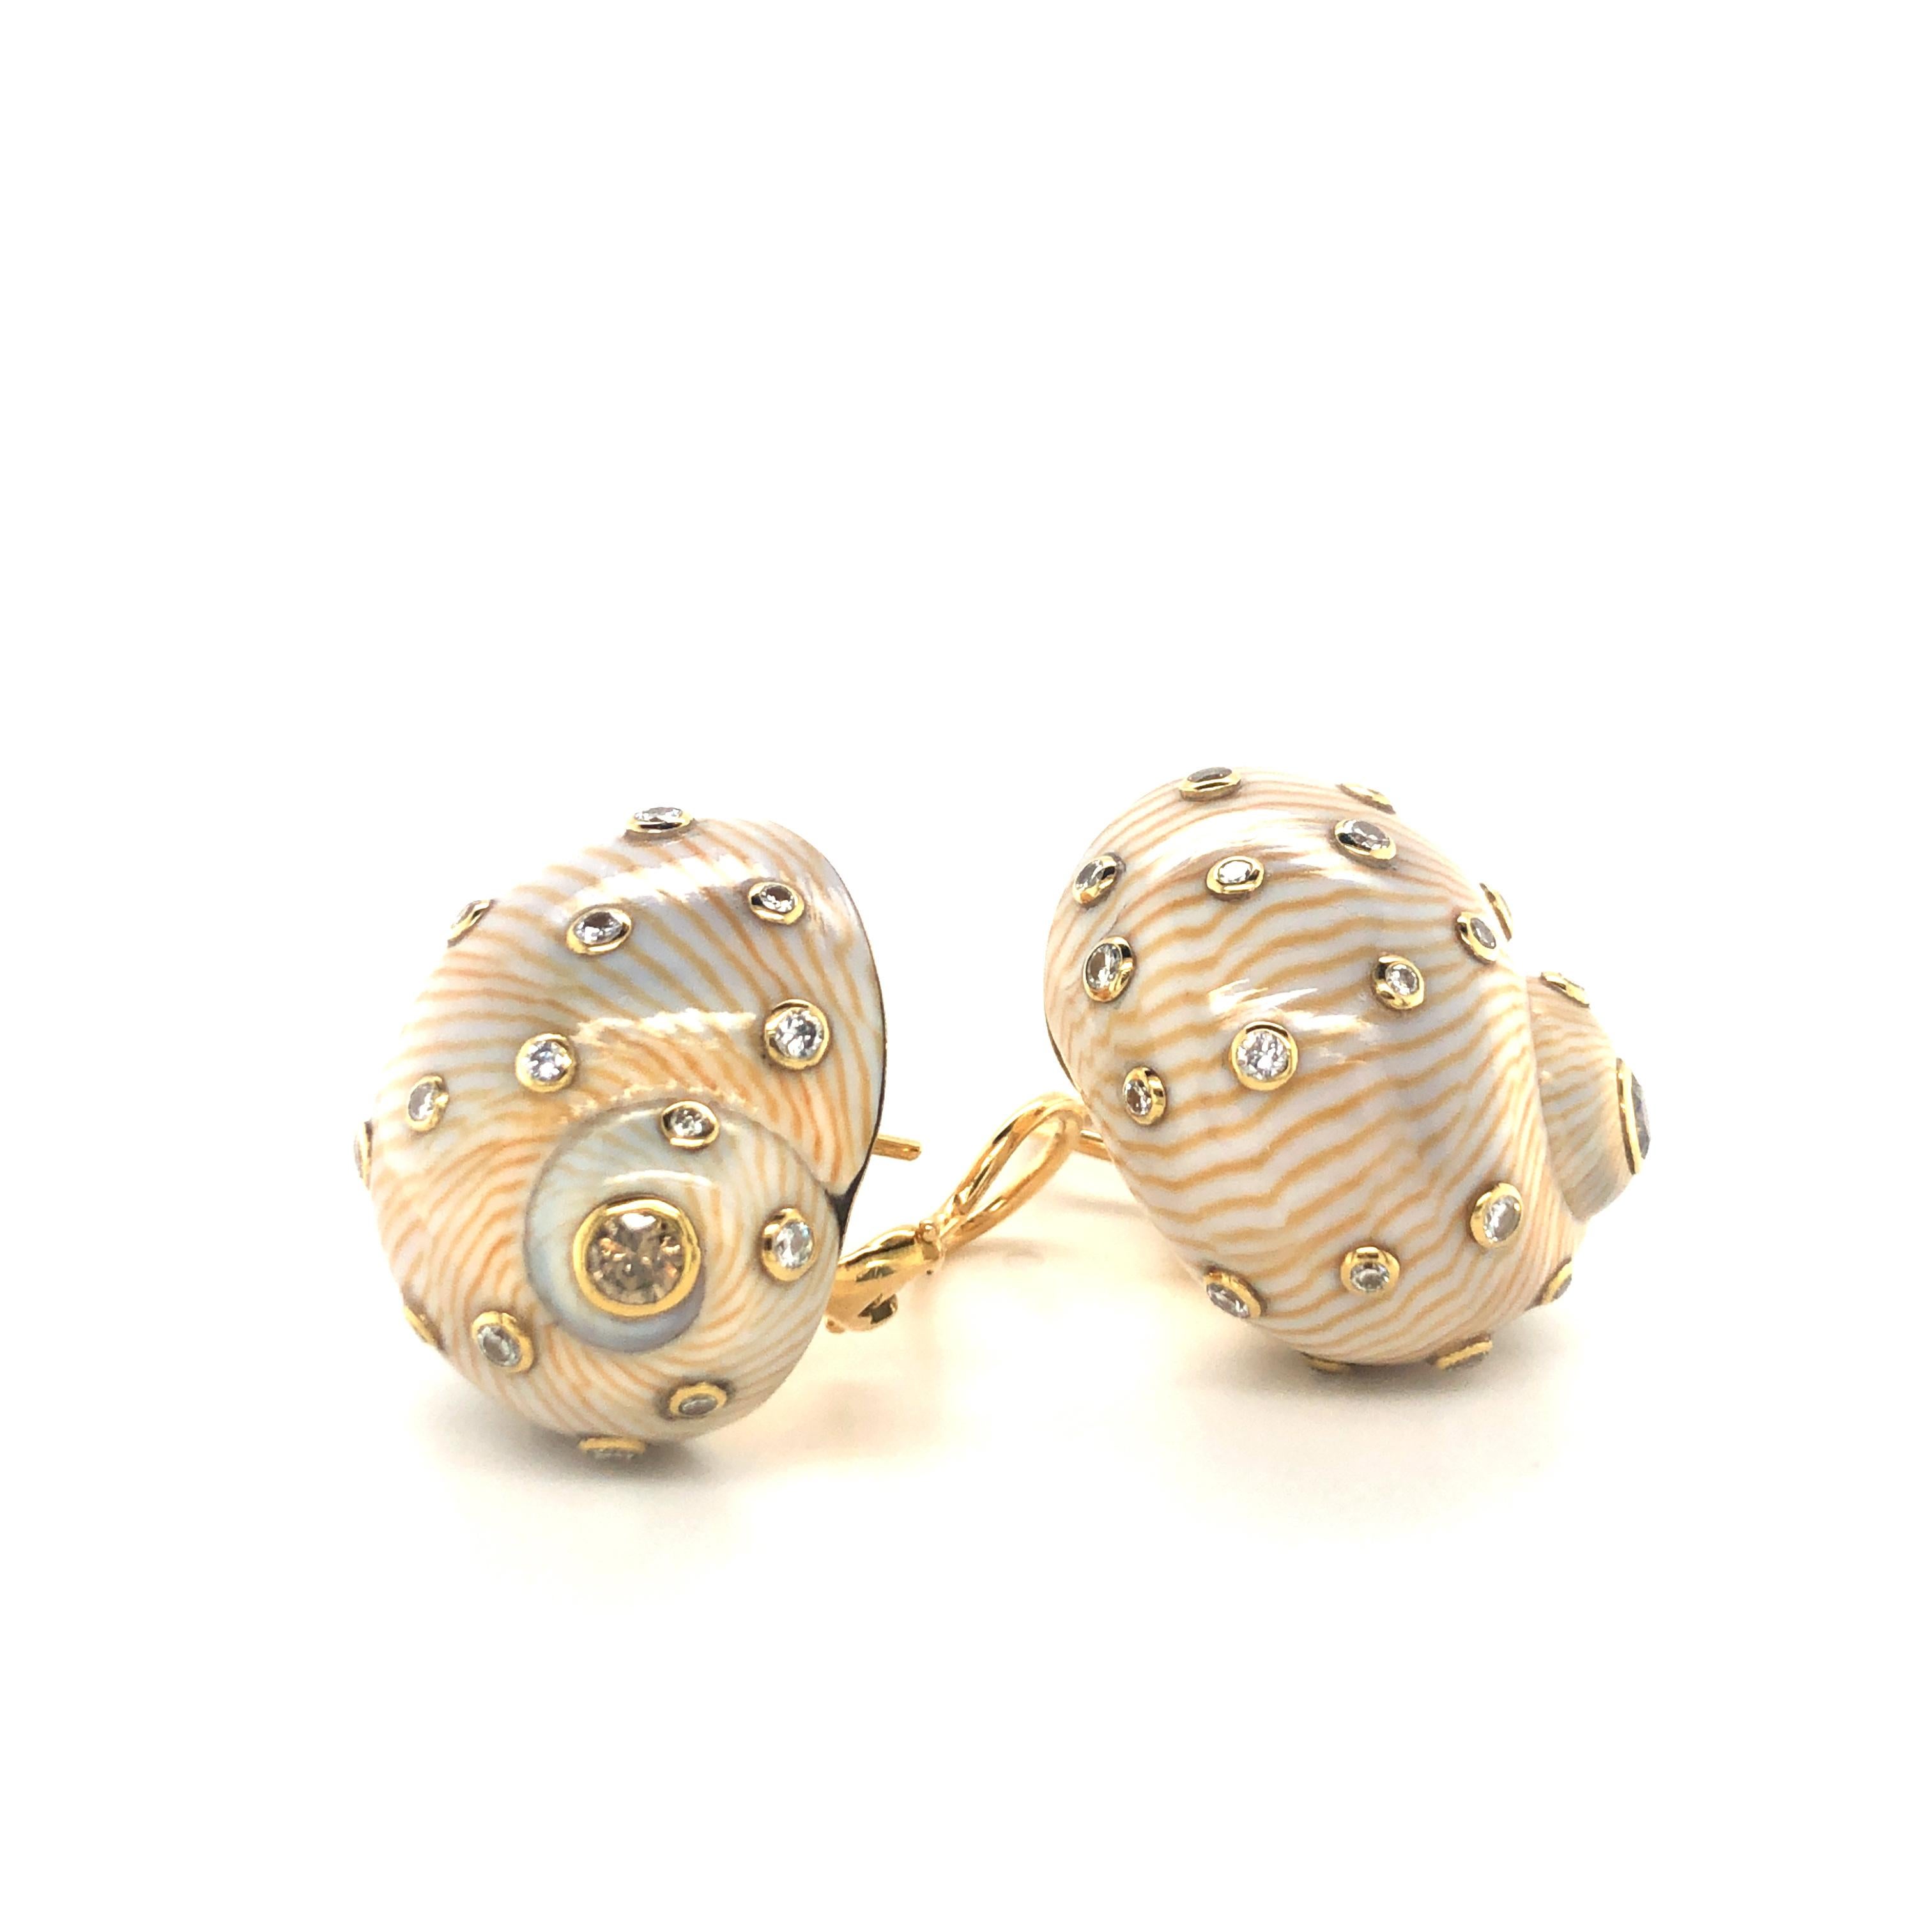 Brilliant Cut Snail Shell Earrings with Diamonds in Yellow Gold 18 Karat